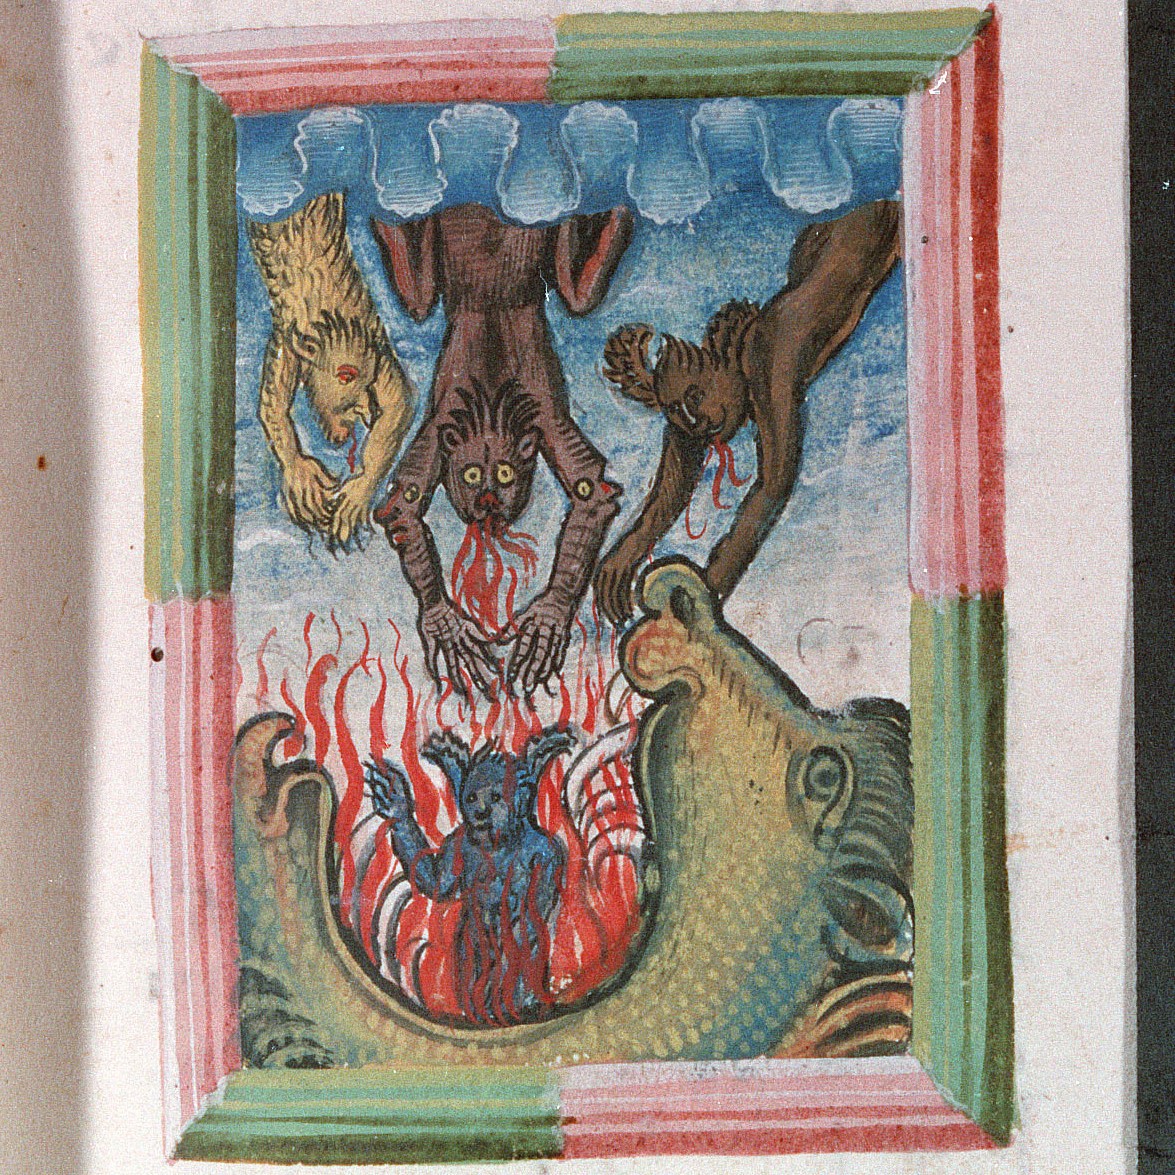 Image from Chronica mundi ab iniitio usque tempora Caroli Magni, Codex Scotensis-Vindobonensis 169 (4014)